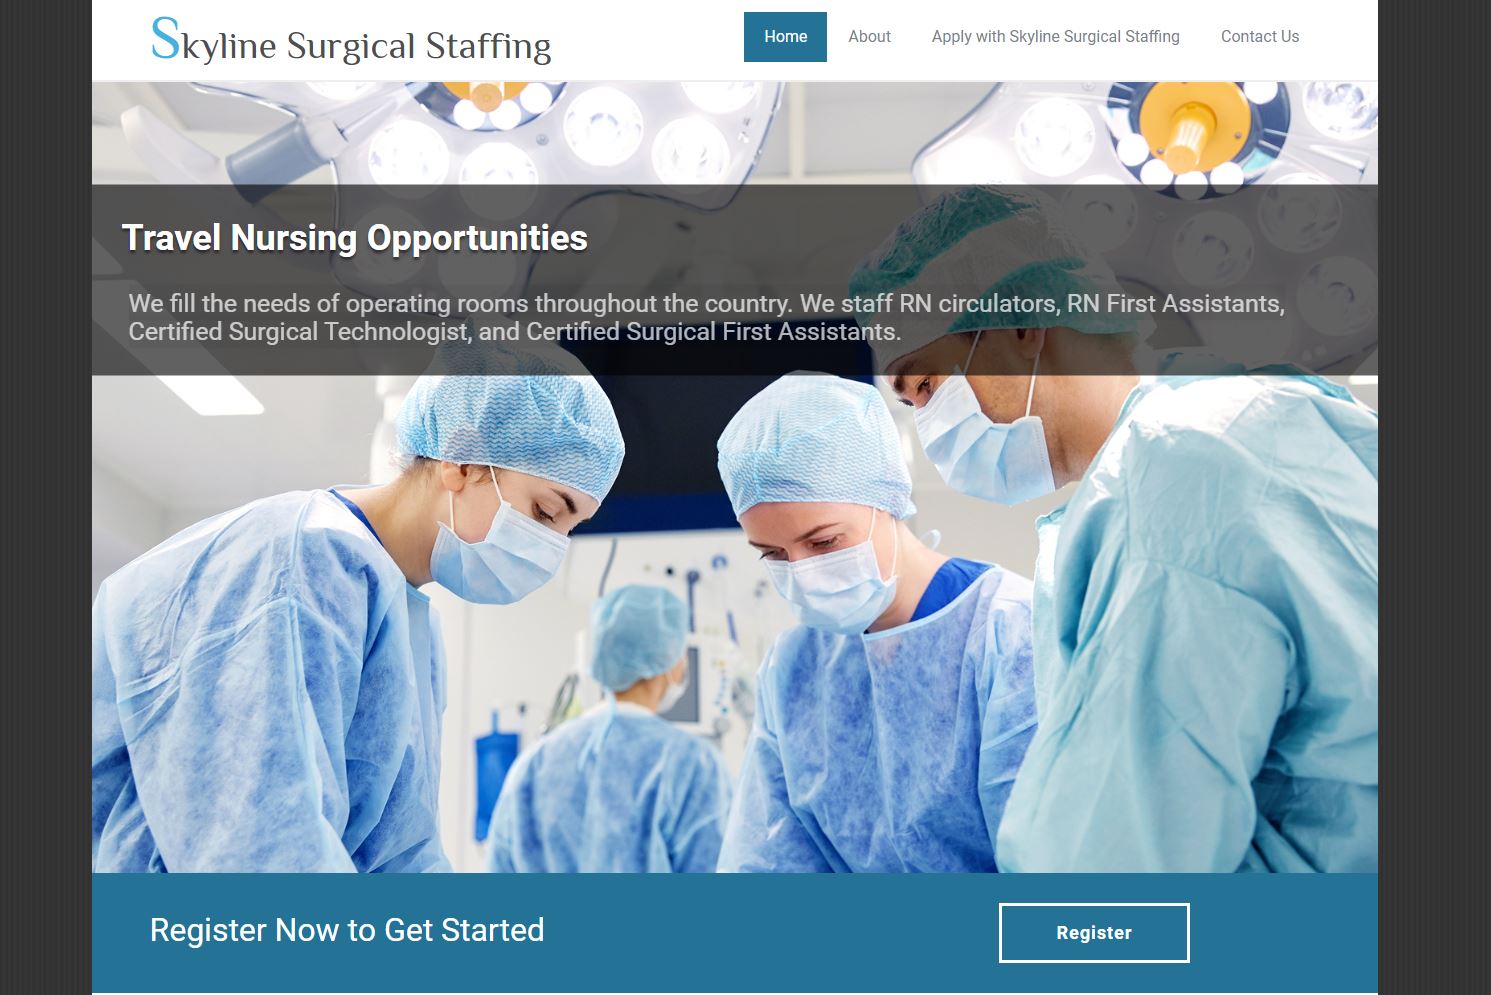 Skyline Surgical Staffing